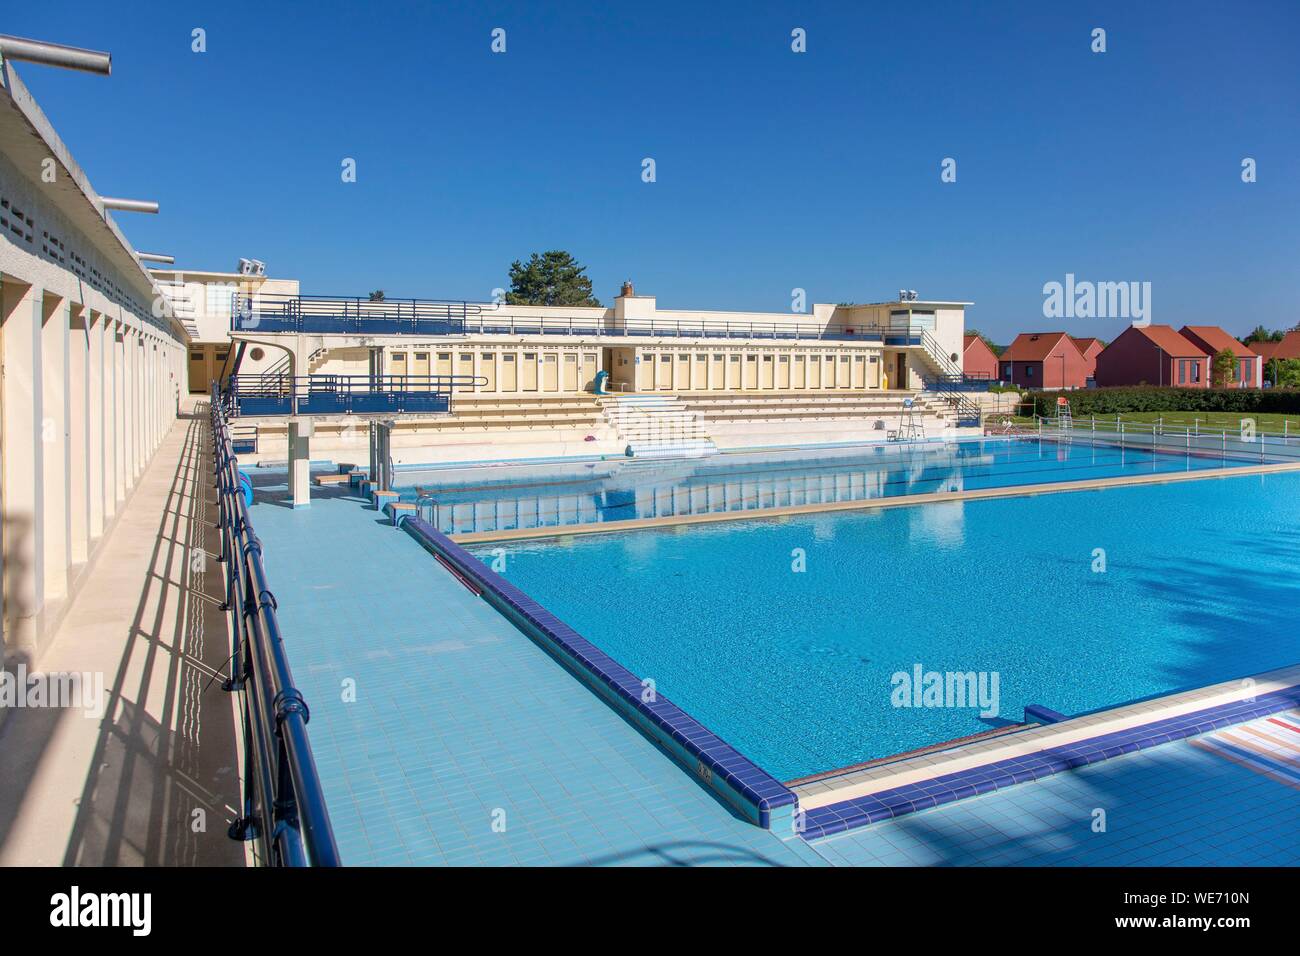 France, Pas de Calais, Bruay la Buissiere, Salengro pool in art deco style Stock Photo